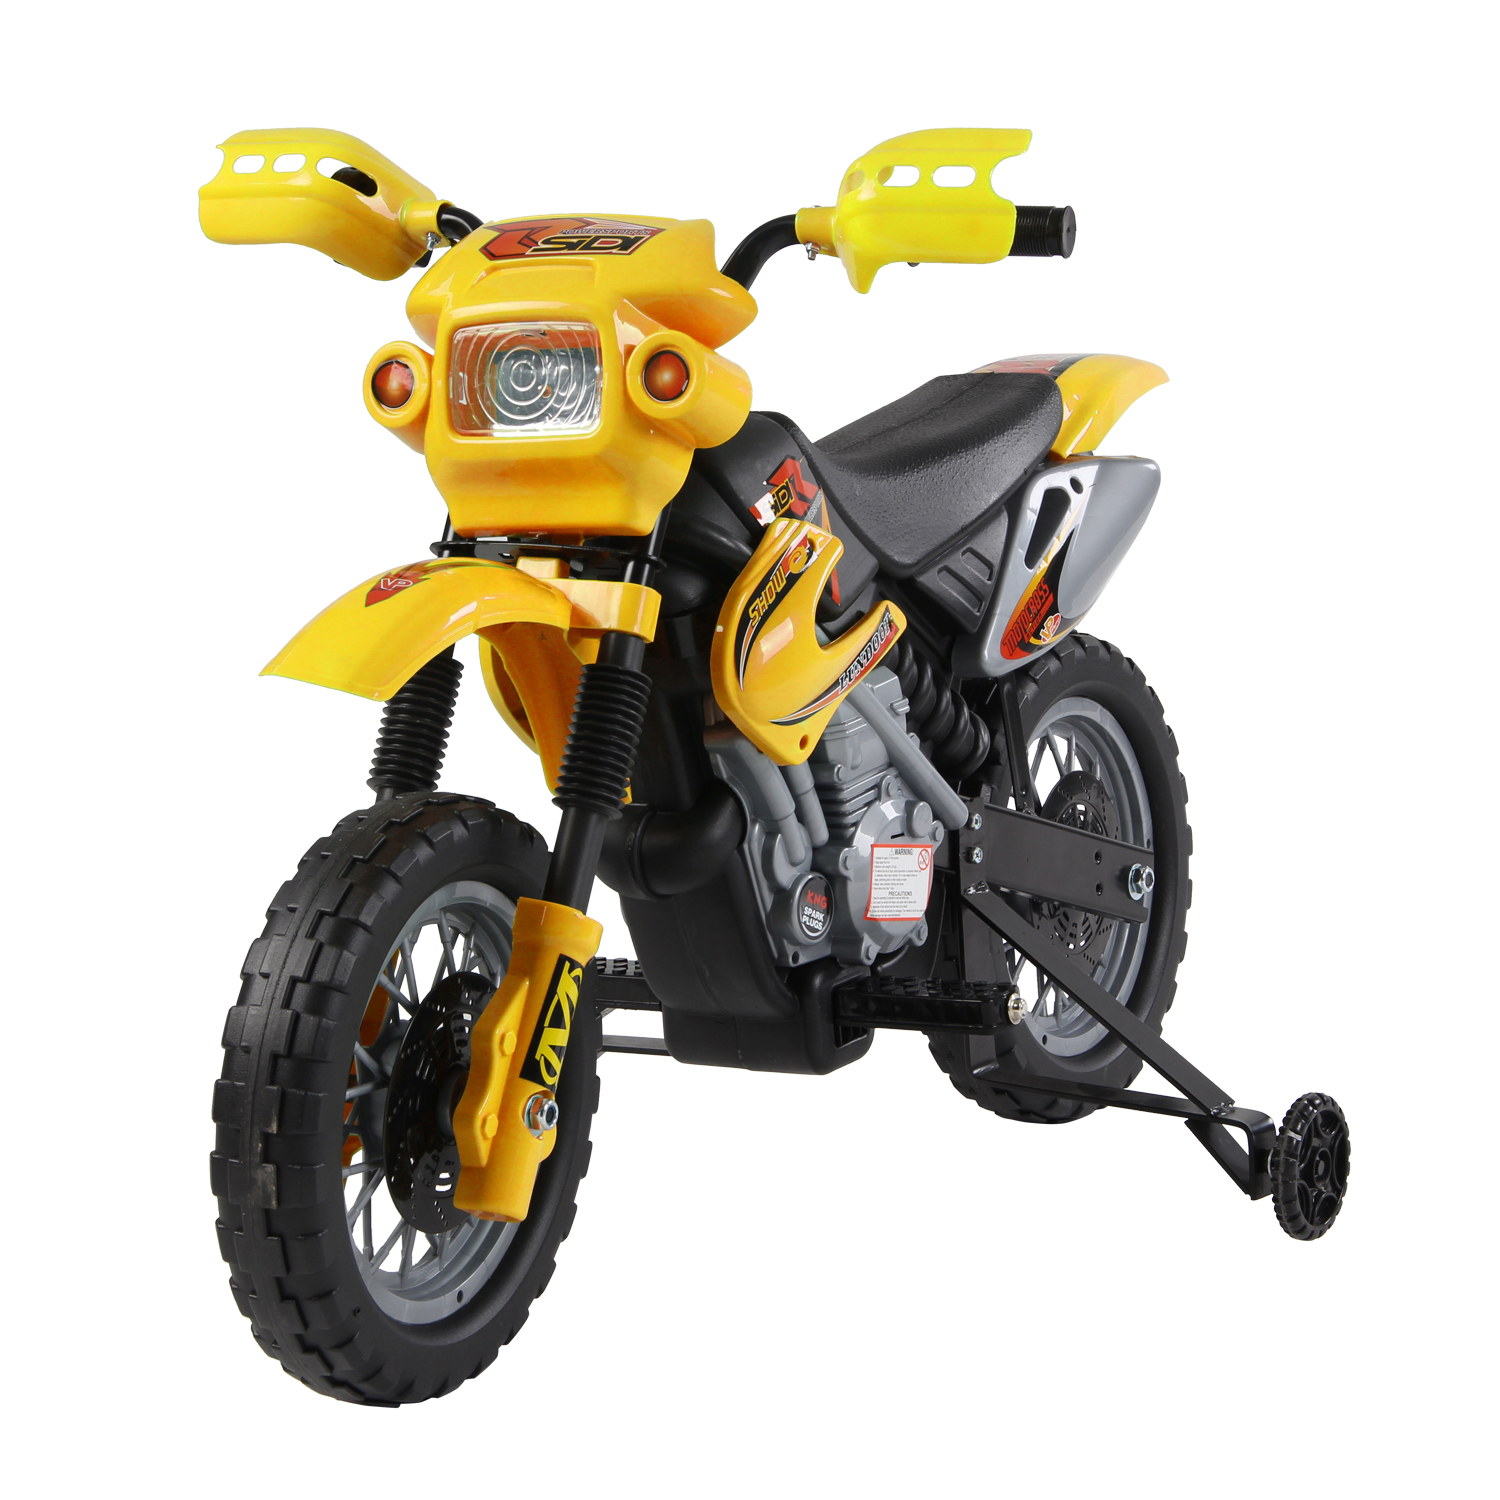 HomCom Ηλεκτρικό ποδήλατο μοτοκρός για παιδιά με ρόδες